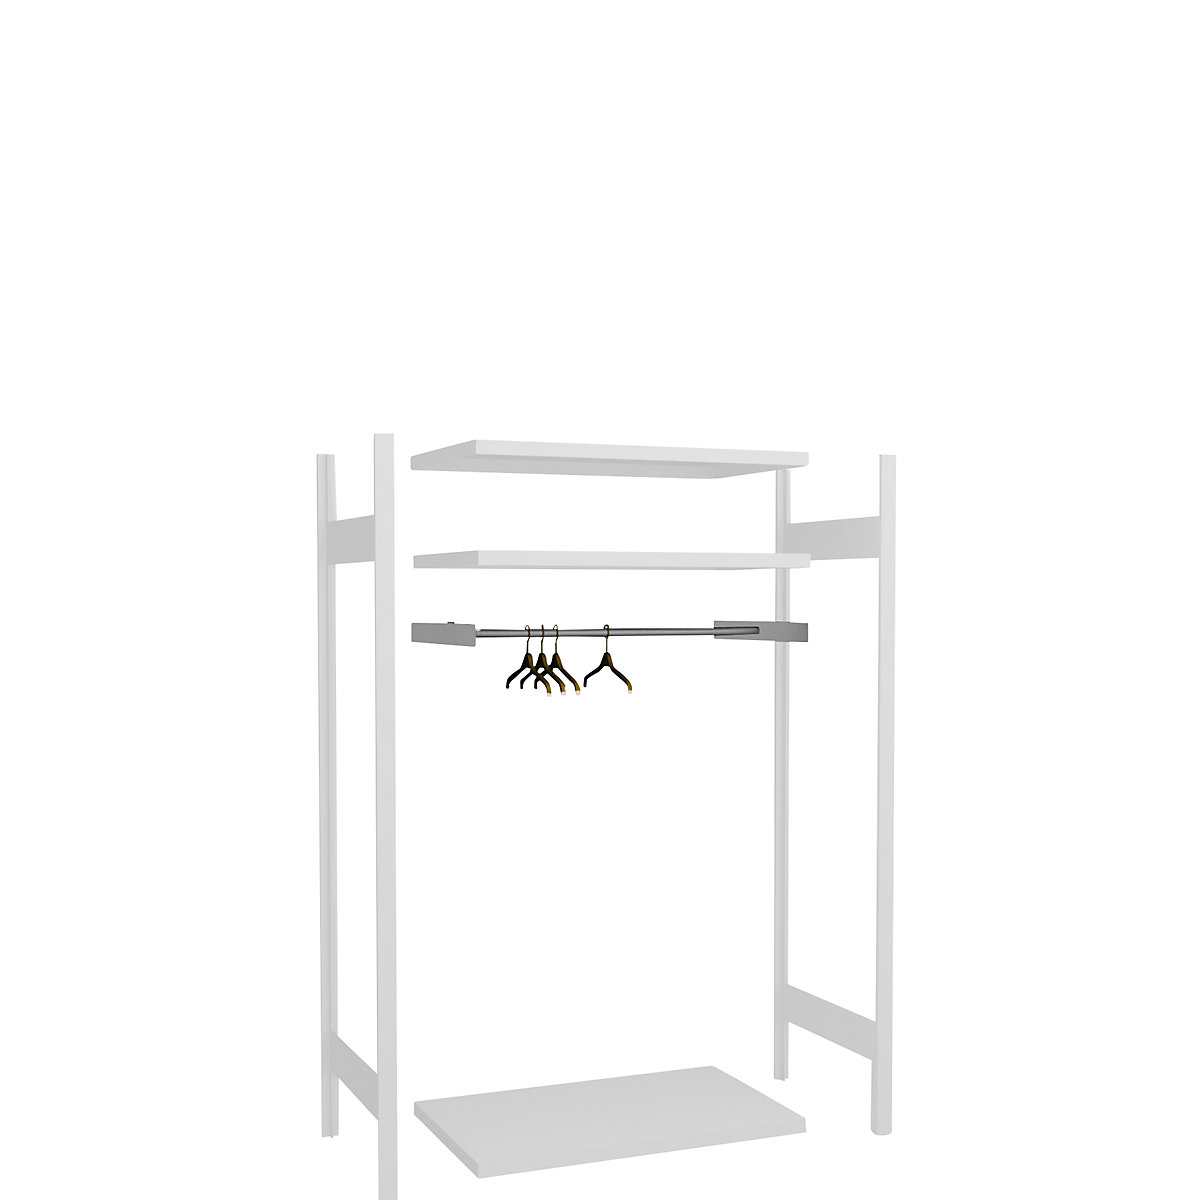 Clothes rail kit – hofe